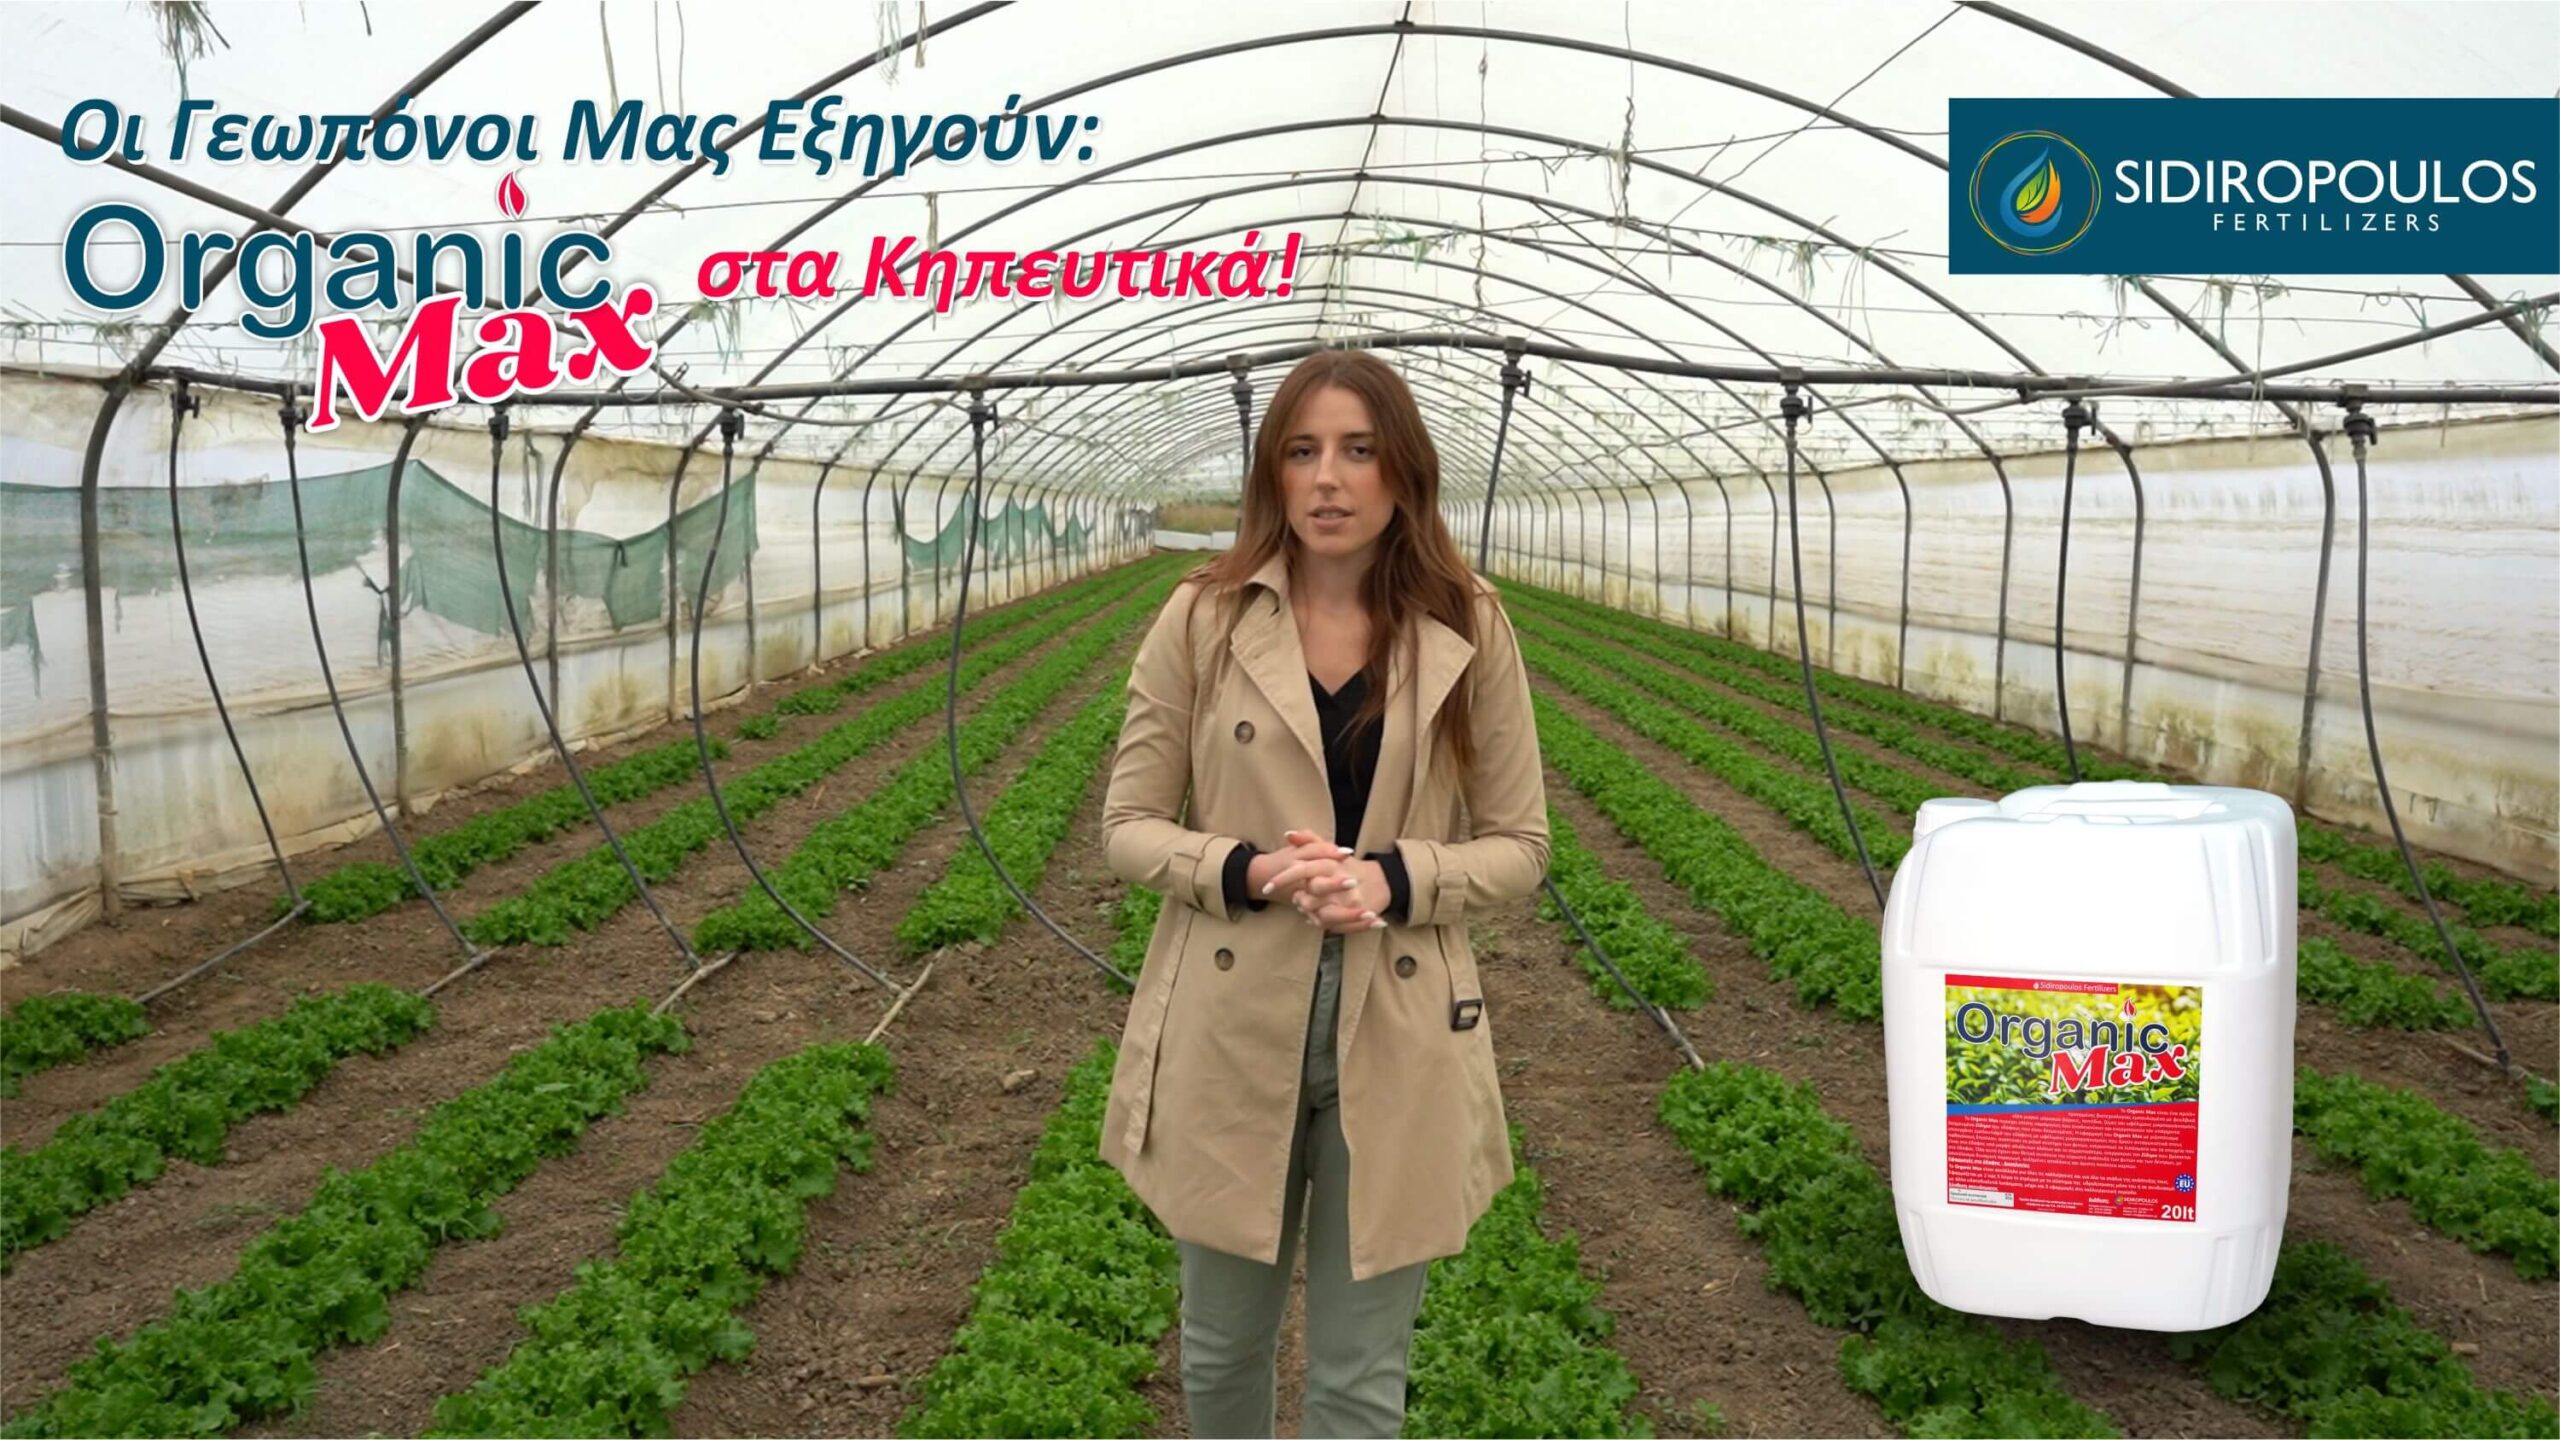 Organic max.sidiropoulos fertilizers,agrosidiro.κηπευτικα.οργανική ουσια.λιπασματα.χουμικα οξέα.φουλβικα οξέα.οργανικα λιπασματα